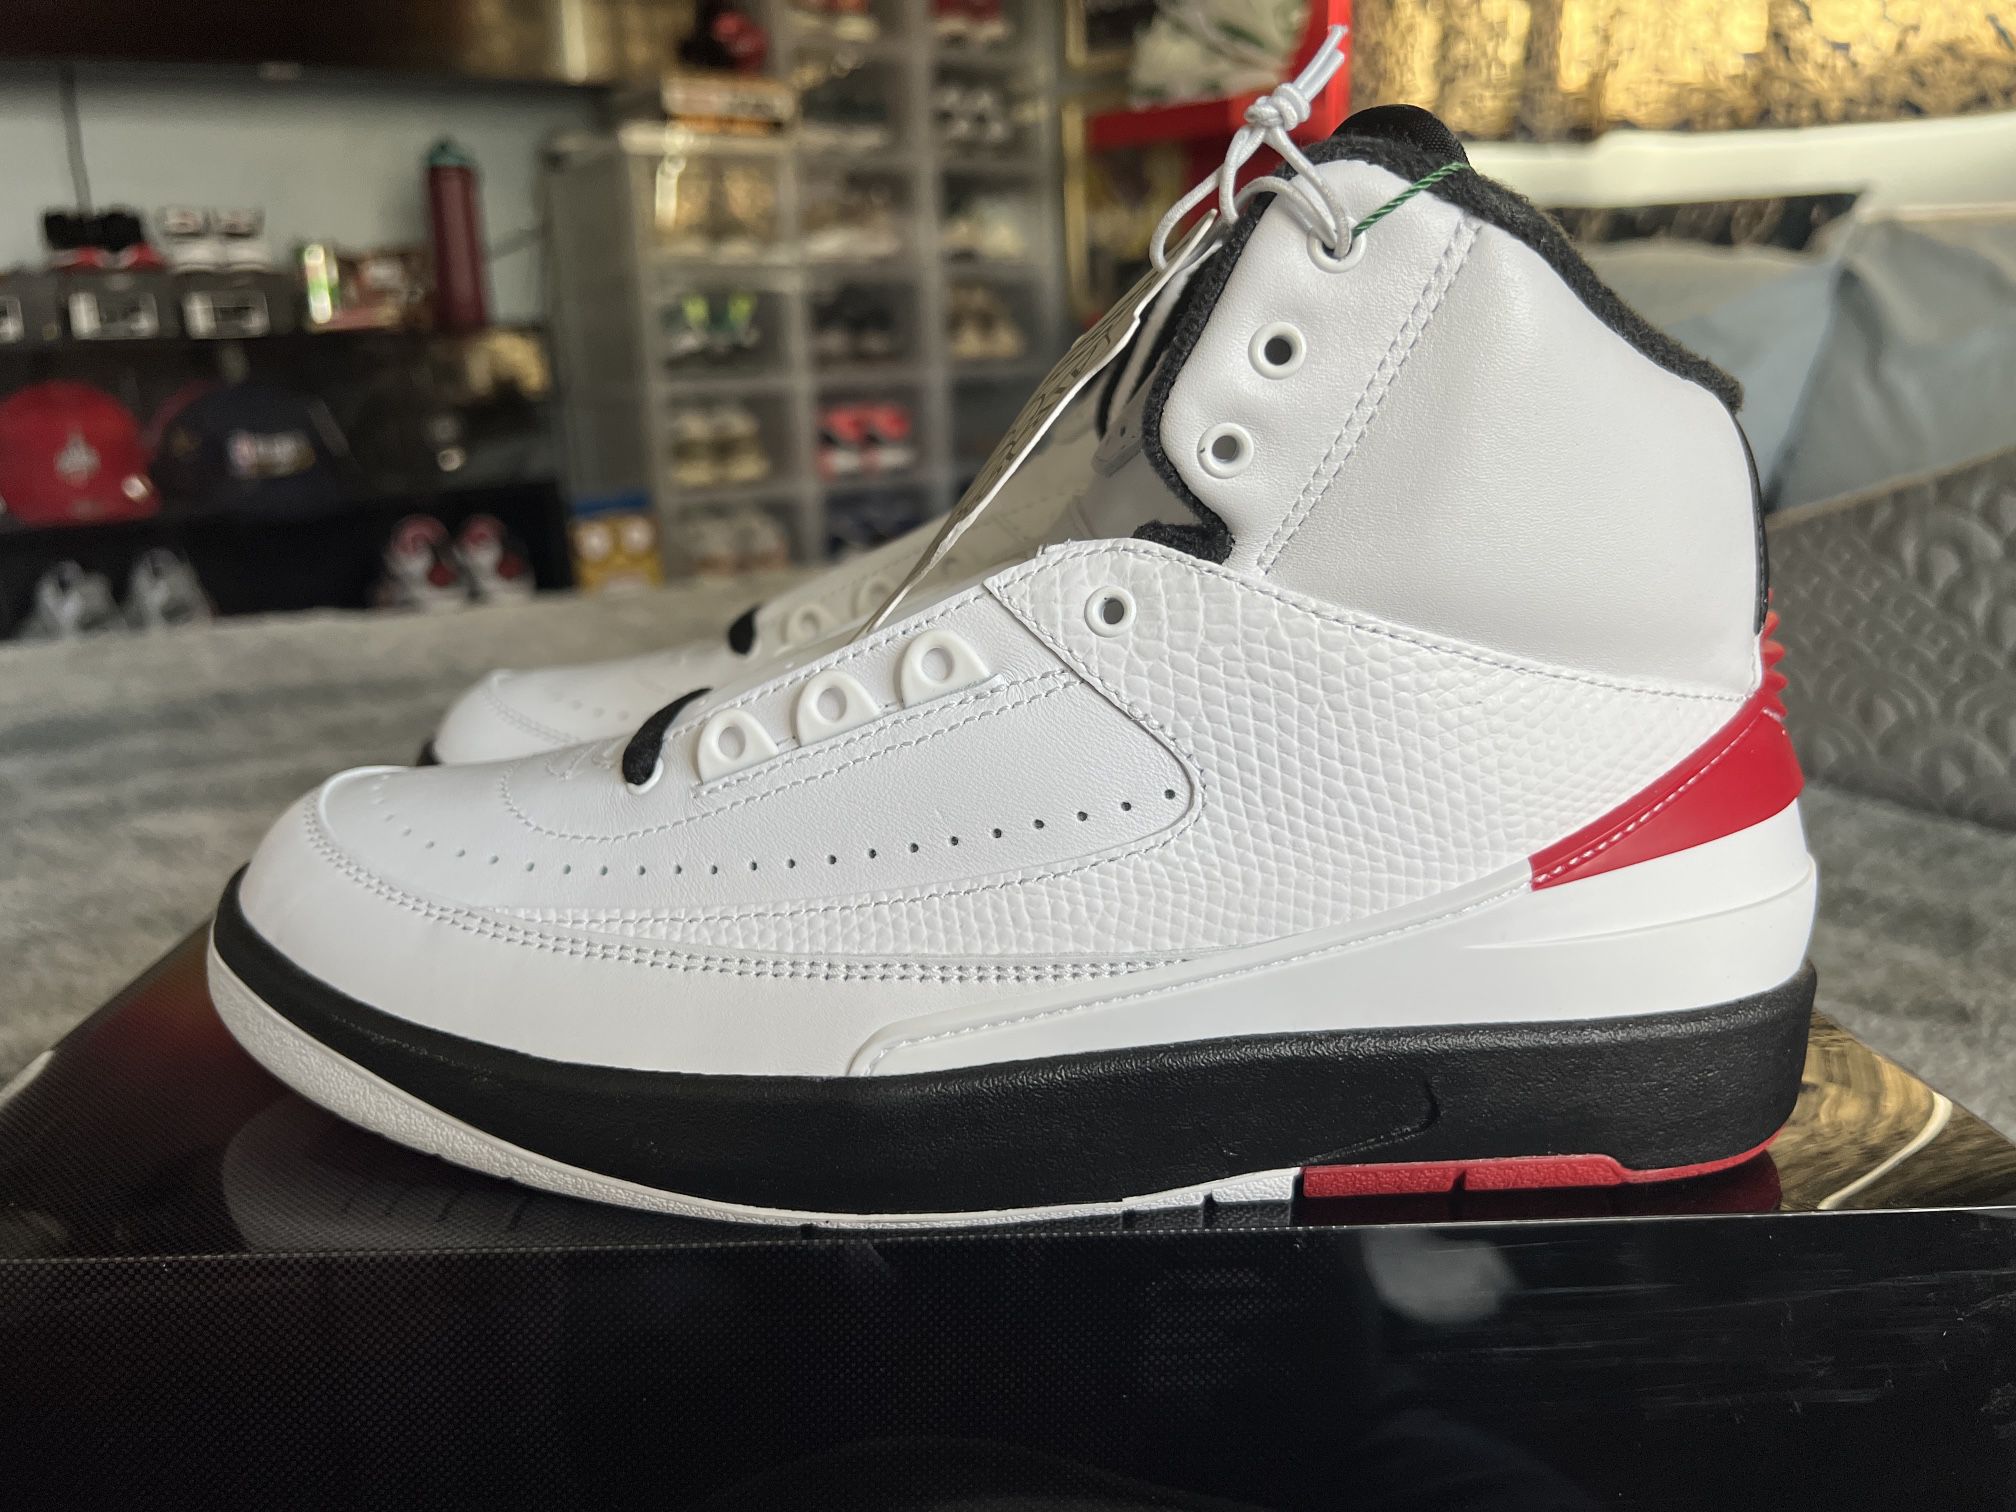 Air Jordan 2 Chicago Size 7.5